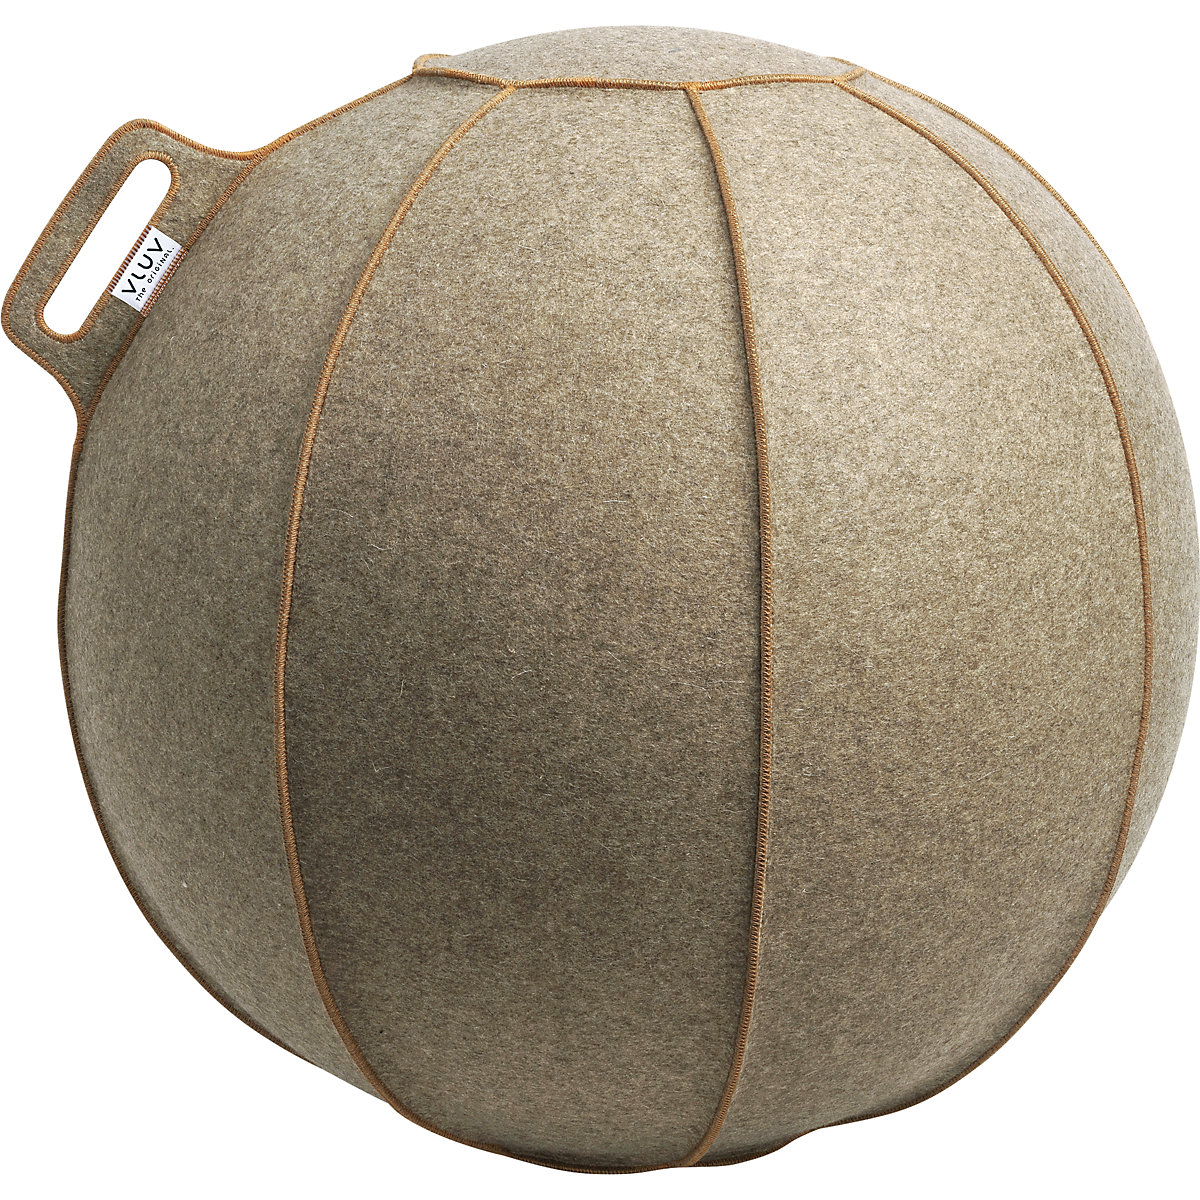 Fitball VELT – VLUV, in feltro di lana merino, 700 – 750 mm, greige-screziato/marrone-7